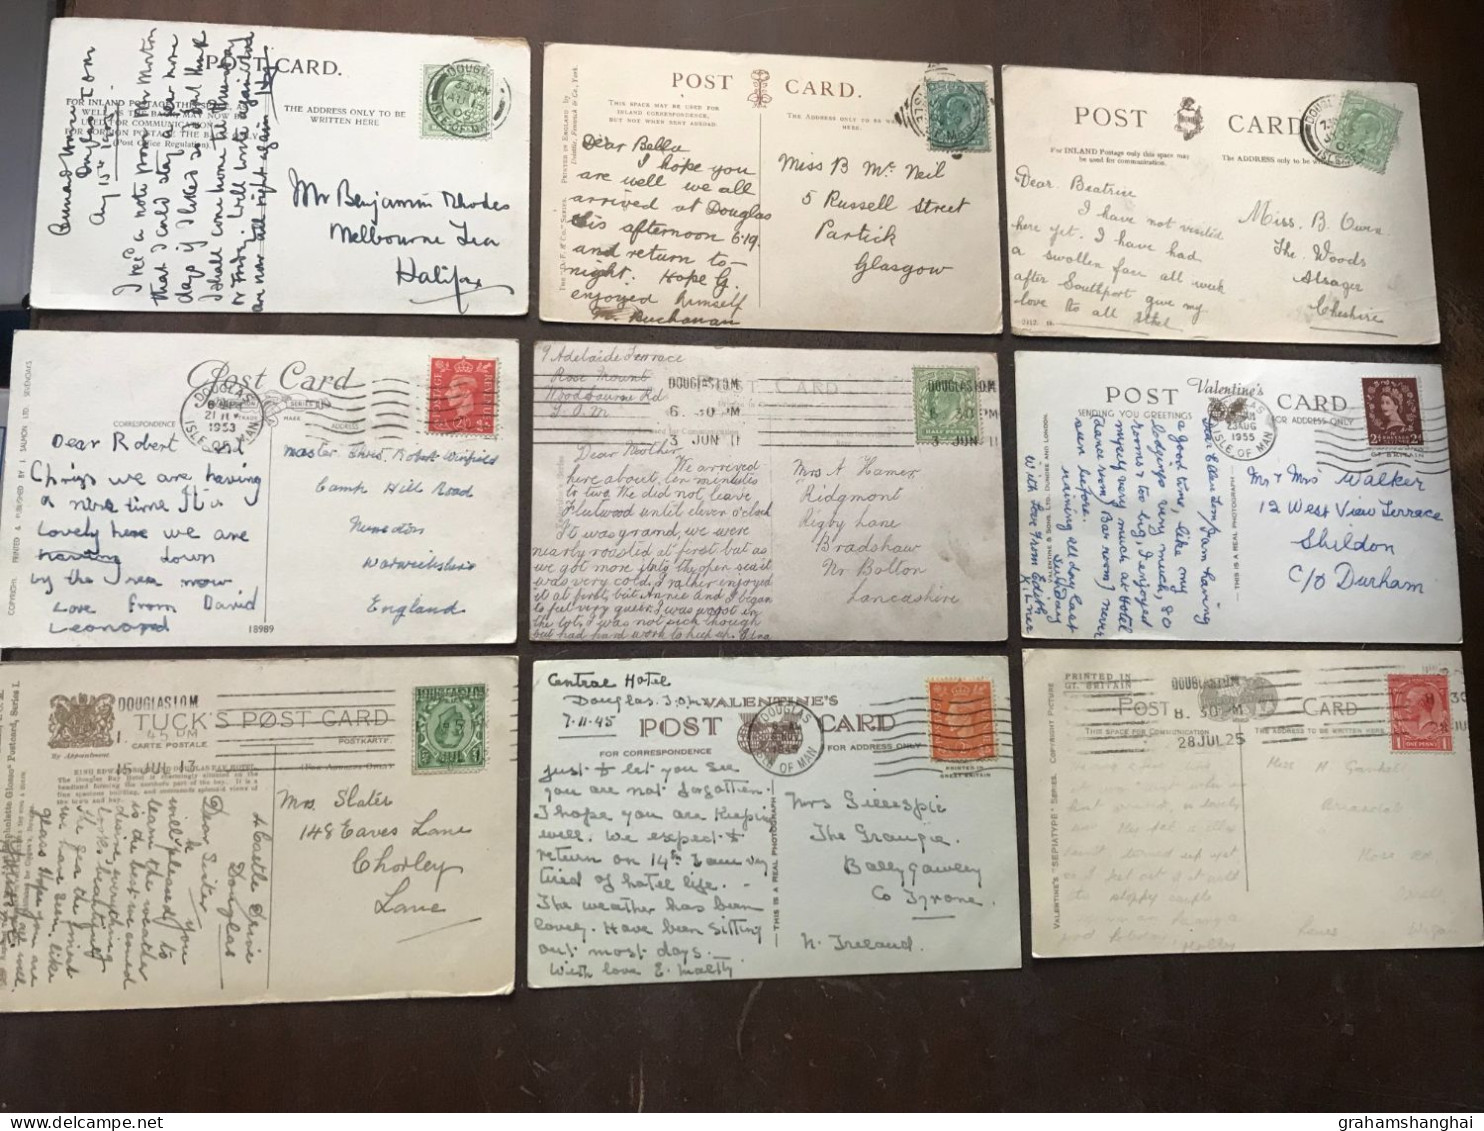 9 Postcards Lot UK IOM Isle Of Man Views Douglas Ramsey Groudle Glen Garwick Glen All Posted 1904-1955 - Insel Man